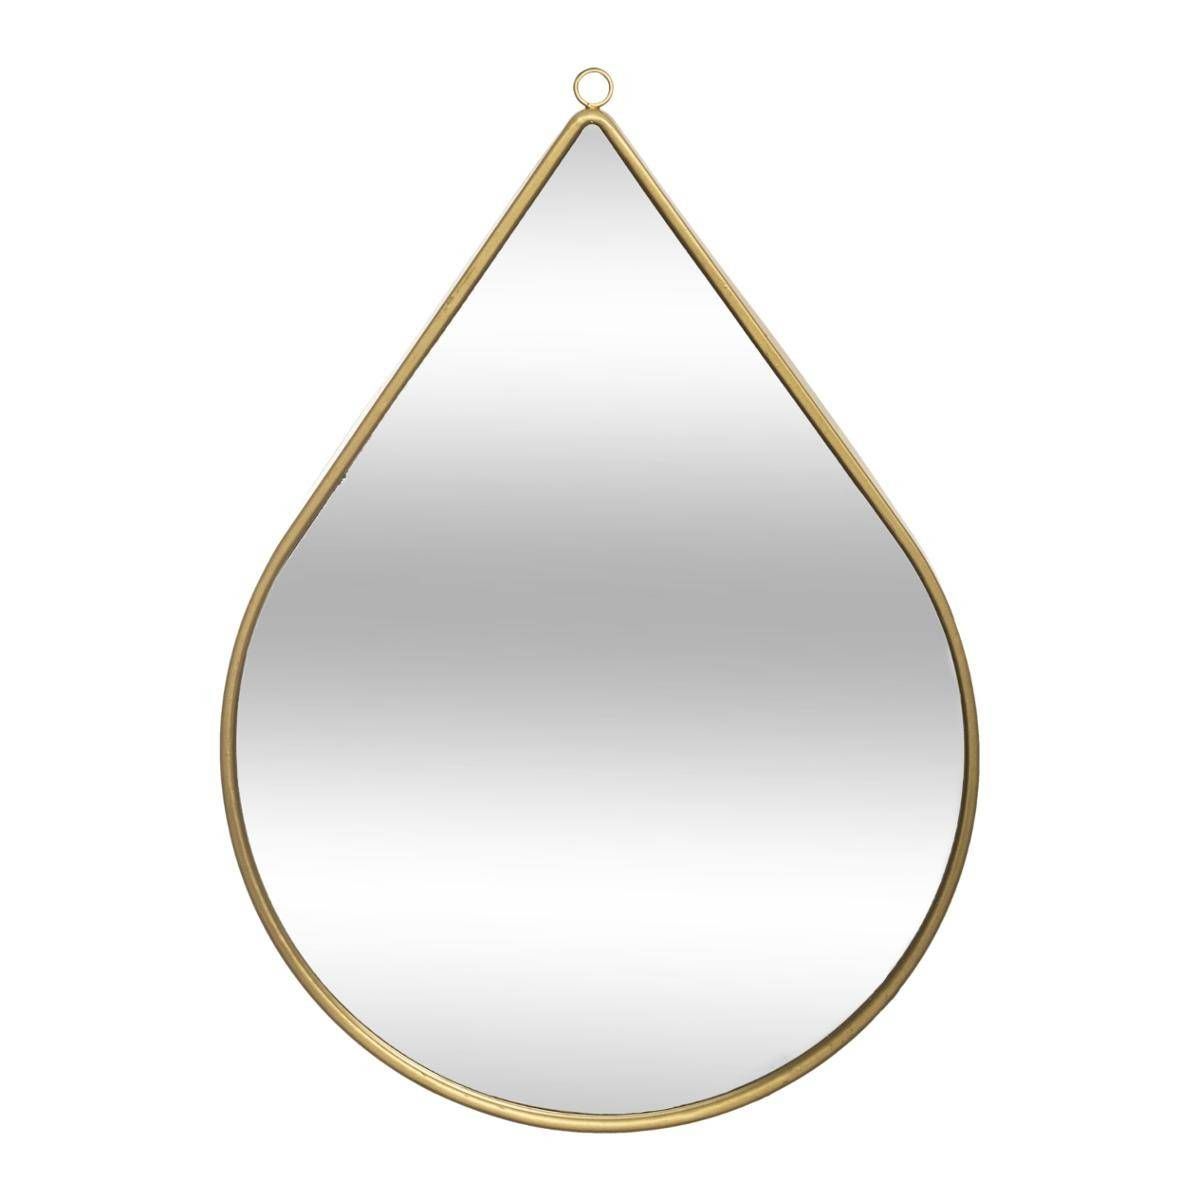 Atmosphera Dekorativní zrcadlo, tvar slzy, 21 x 29 cm, zlatá barva - EDAXO.CZ s.r.o.